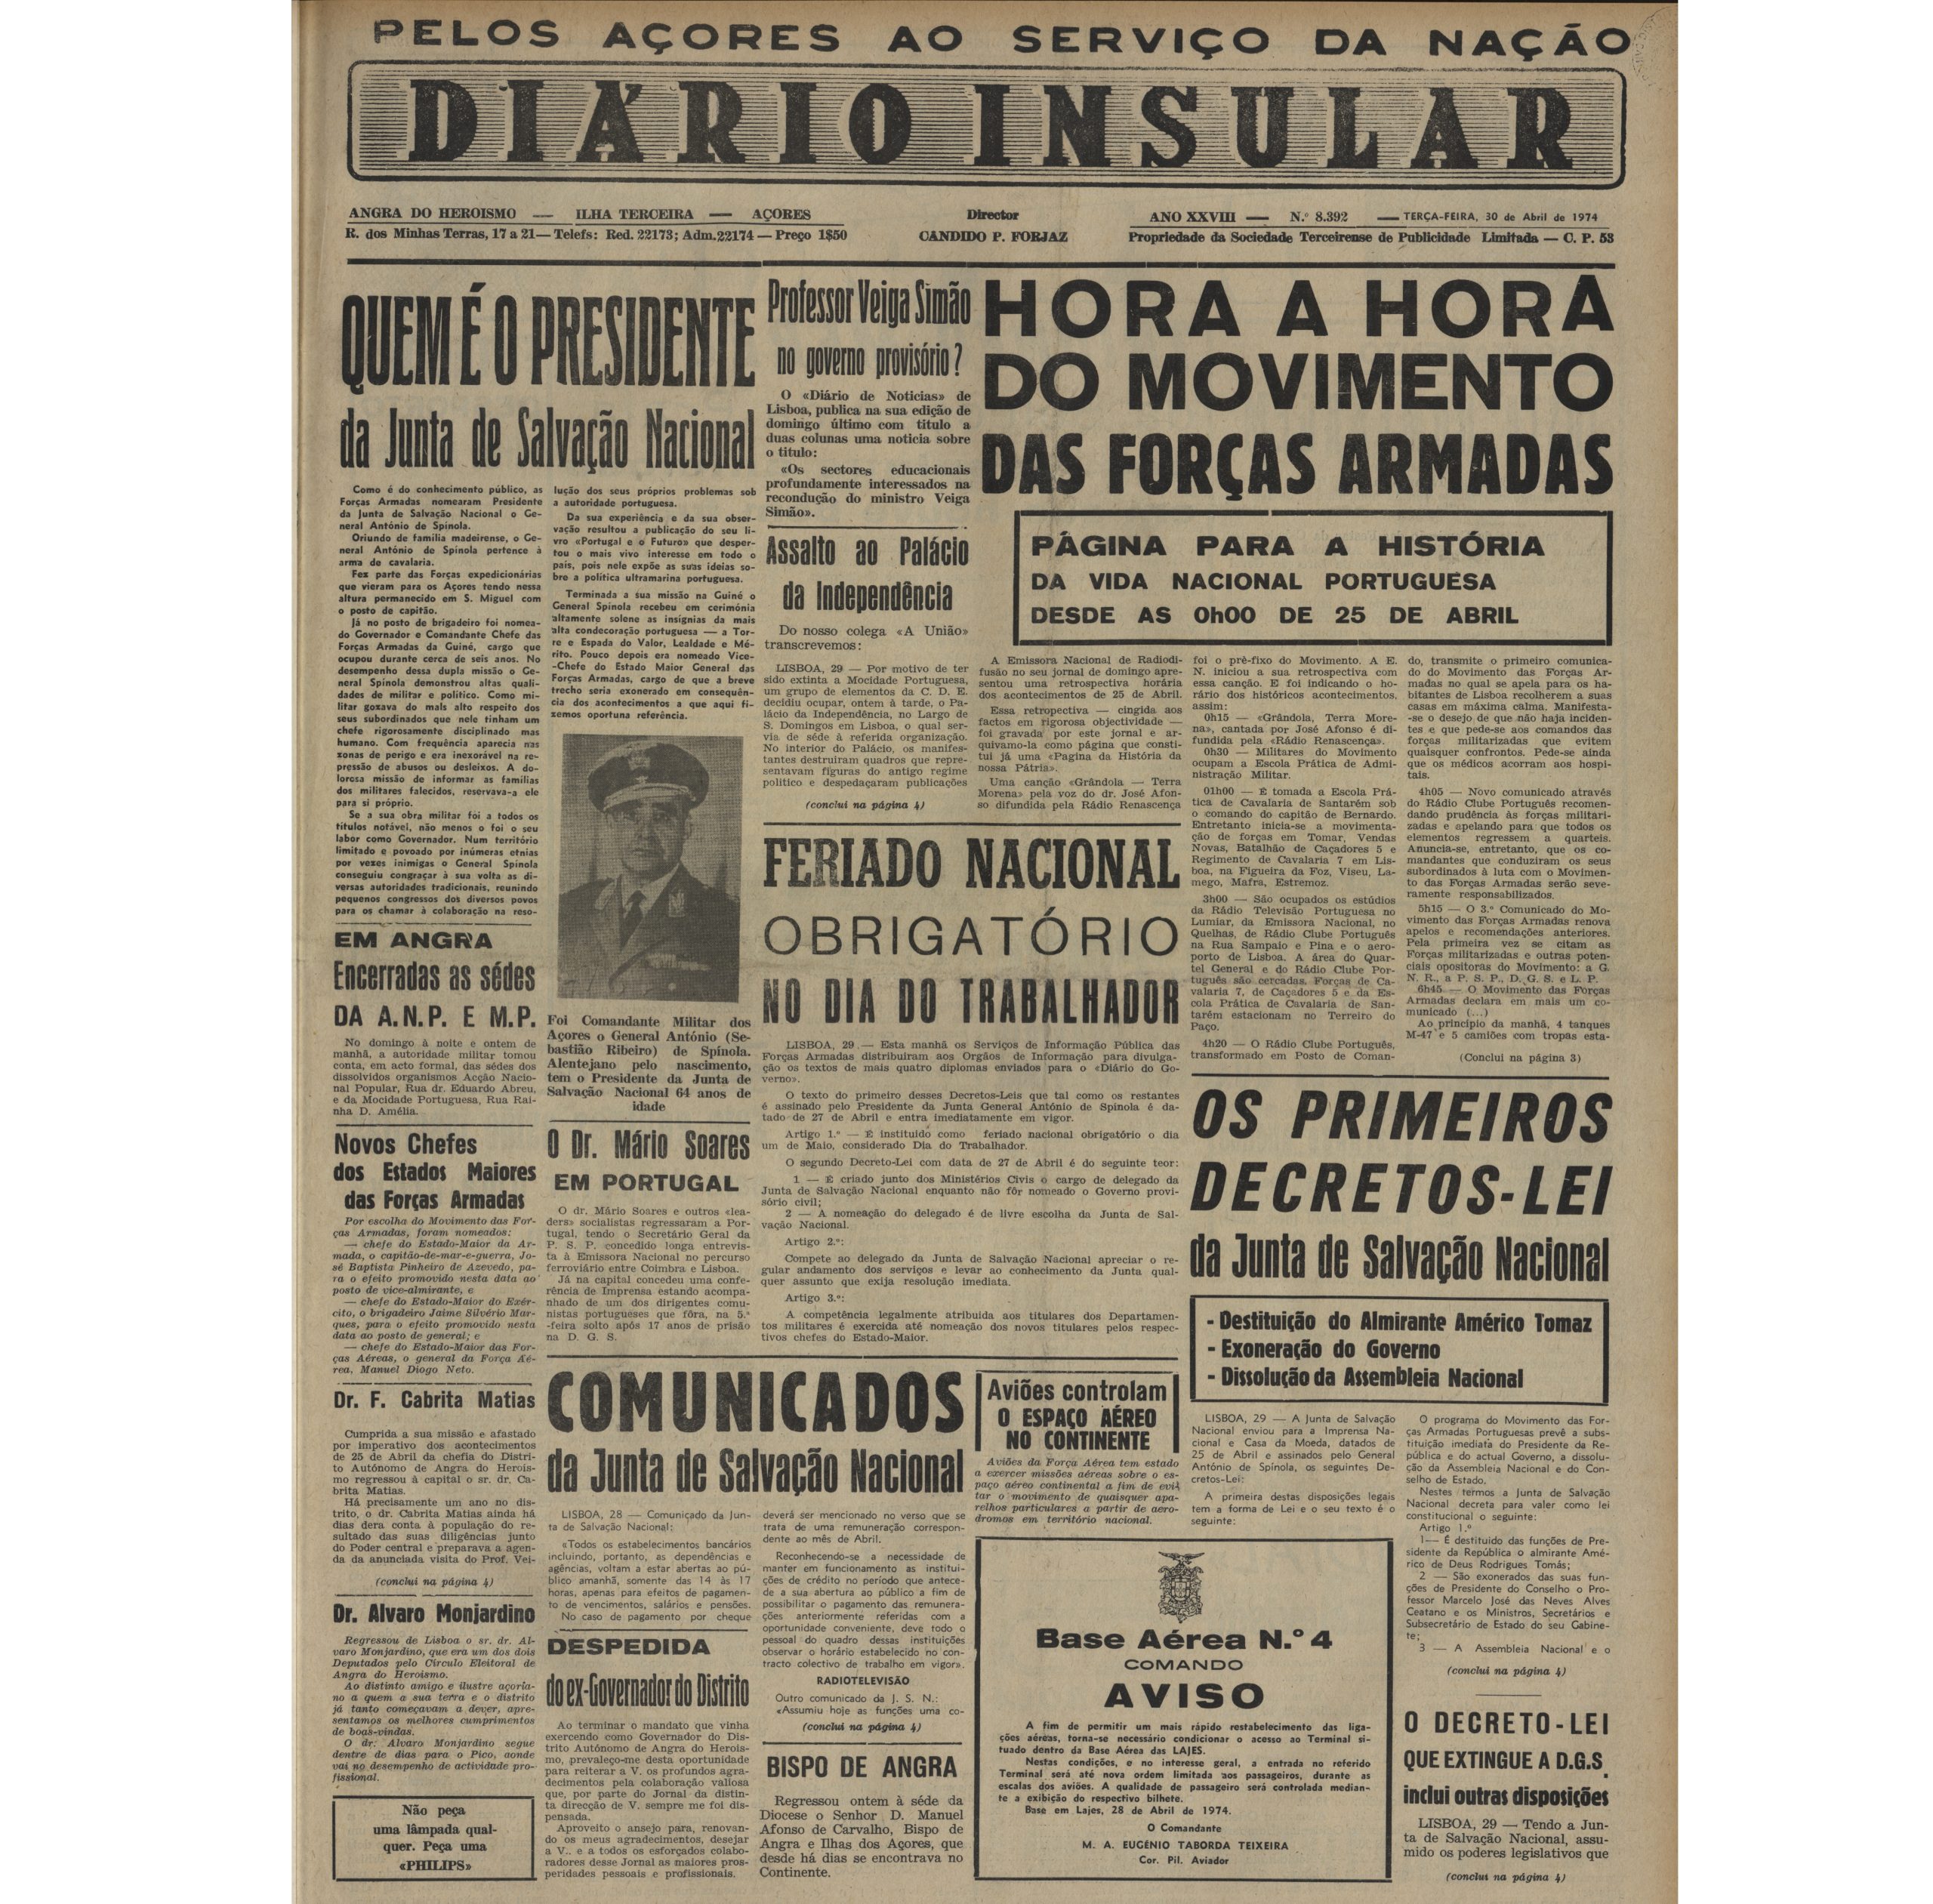 Diarioinsular_30.04.1974